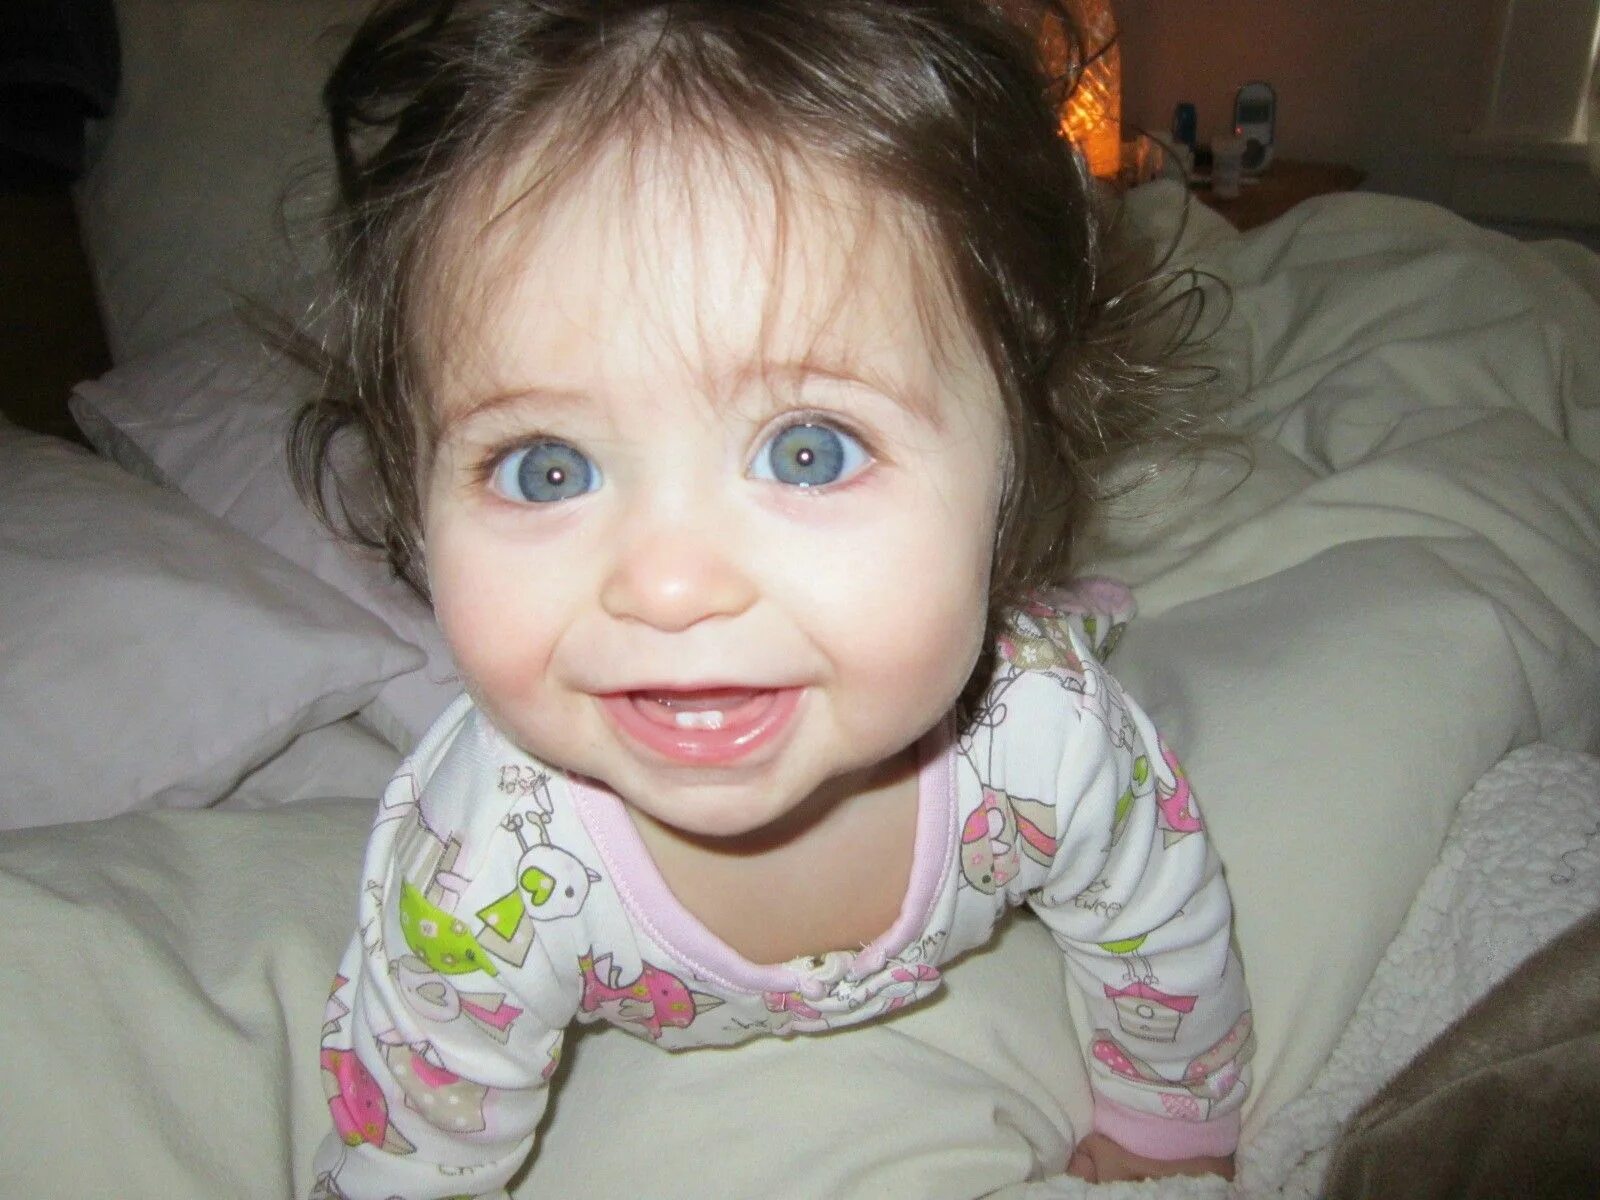 Baby got eyes. Baby Blue Eyes. Baby with Dark hair. Pung. Baby Blue Eyes. Green eyed Baby.